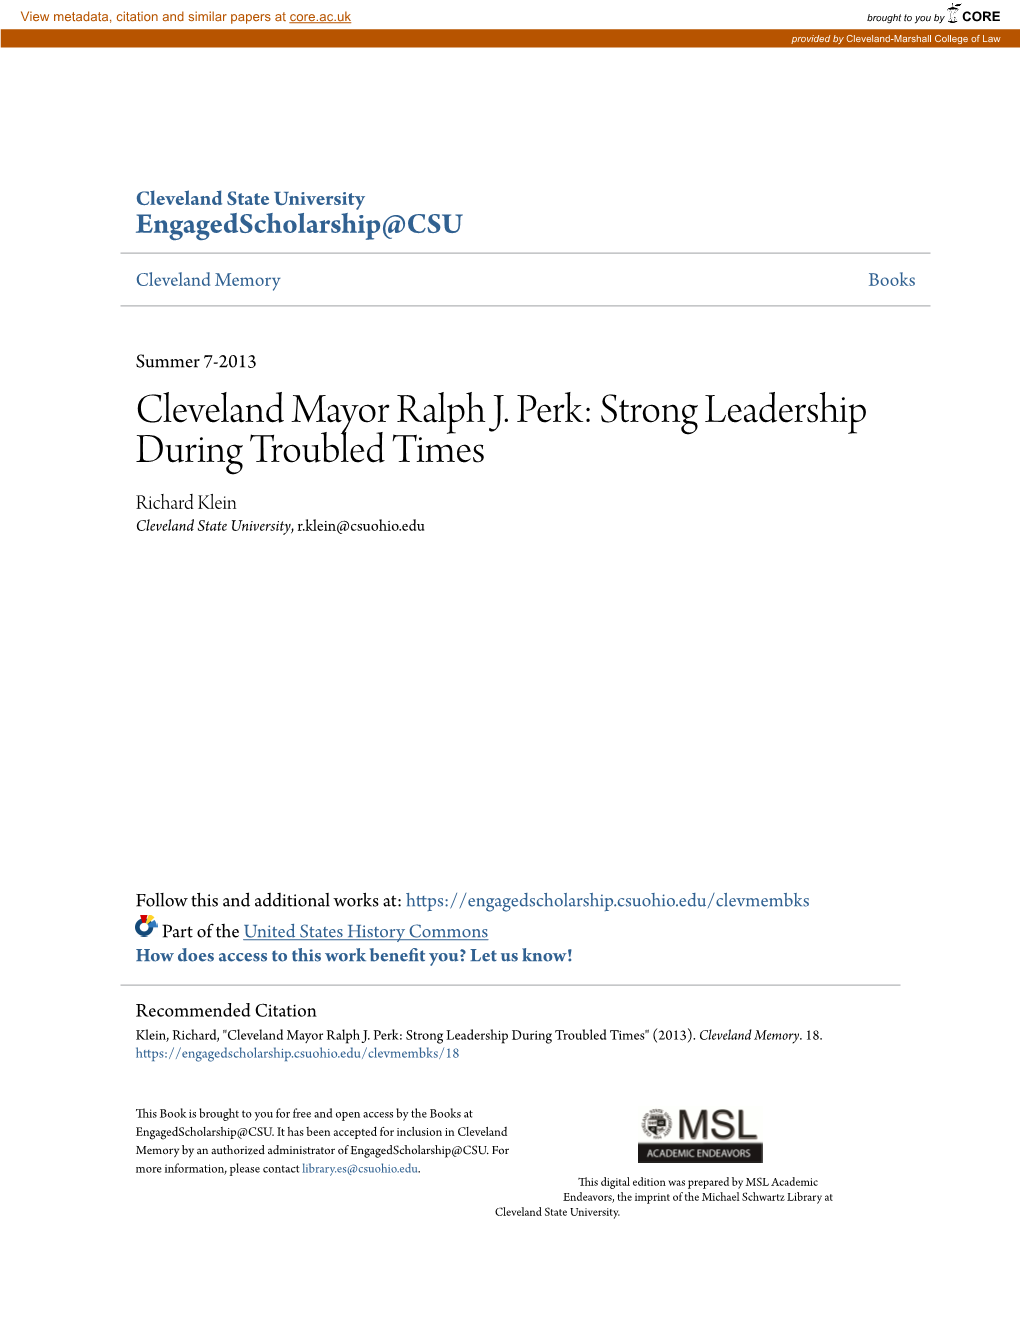 Cleveland Mayor Ralph J. Perk: Strong Leadership During Troubled Times Richard Klein Cleveland State University, R.Klein@Csuohio.Edu